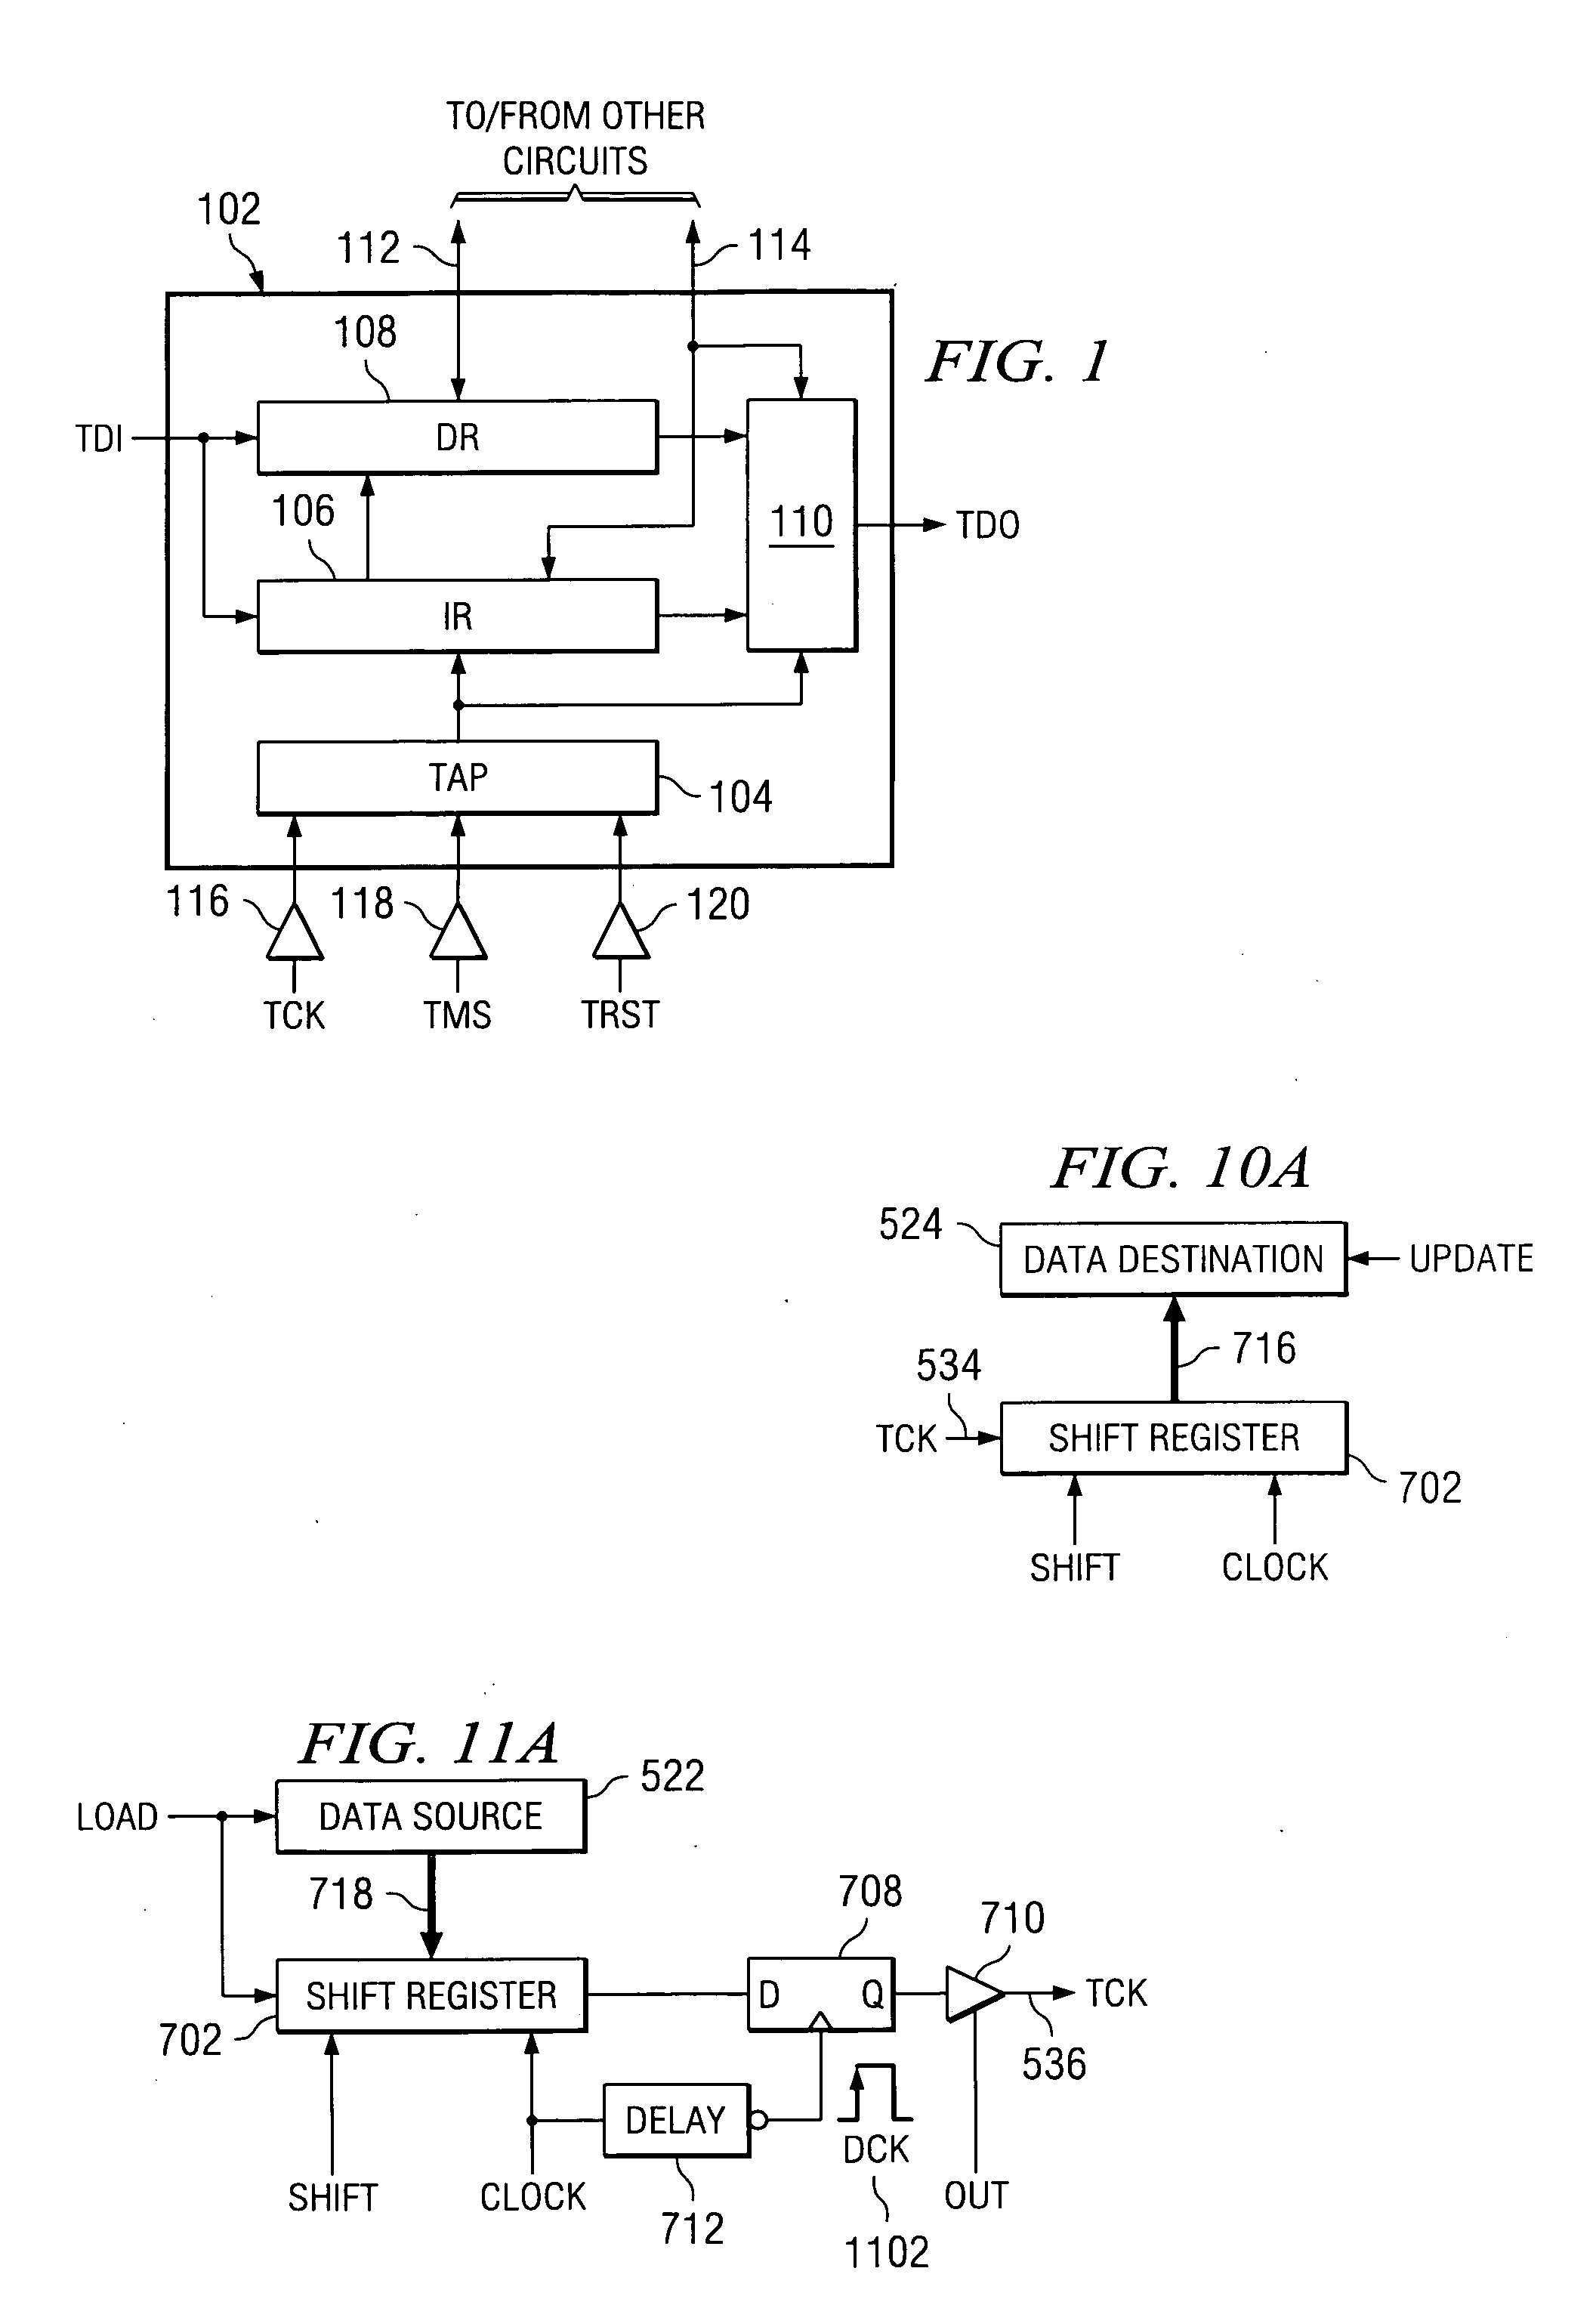 Serial I/O using JTAG TCK and TMS signals